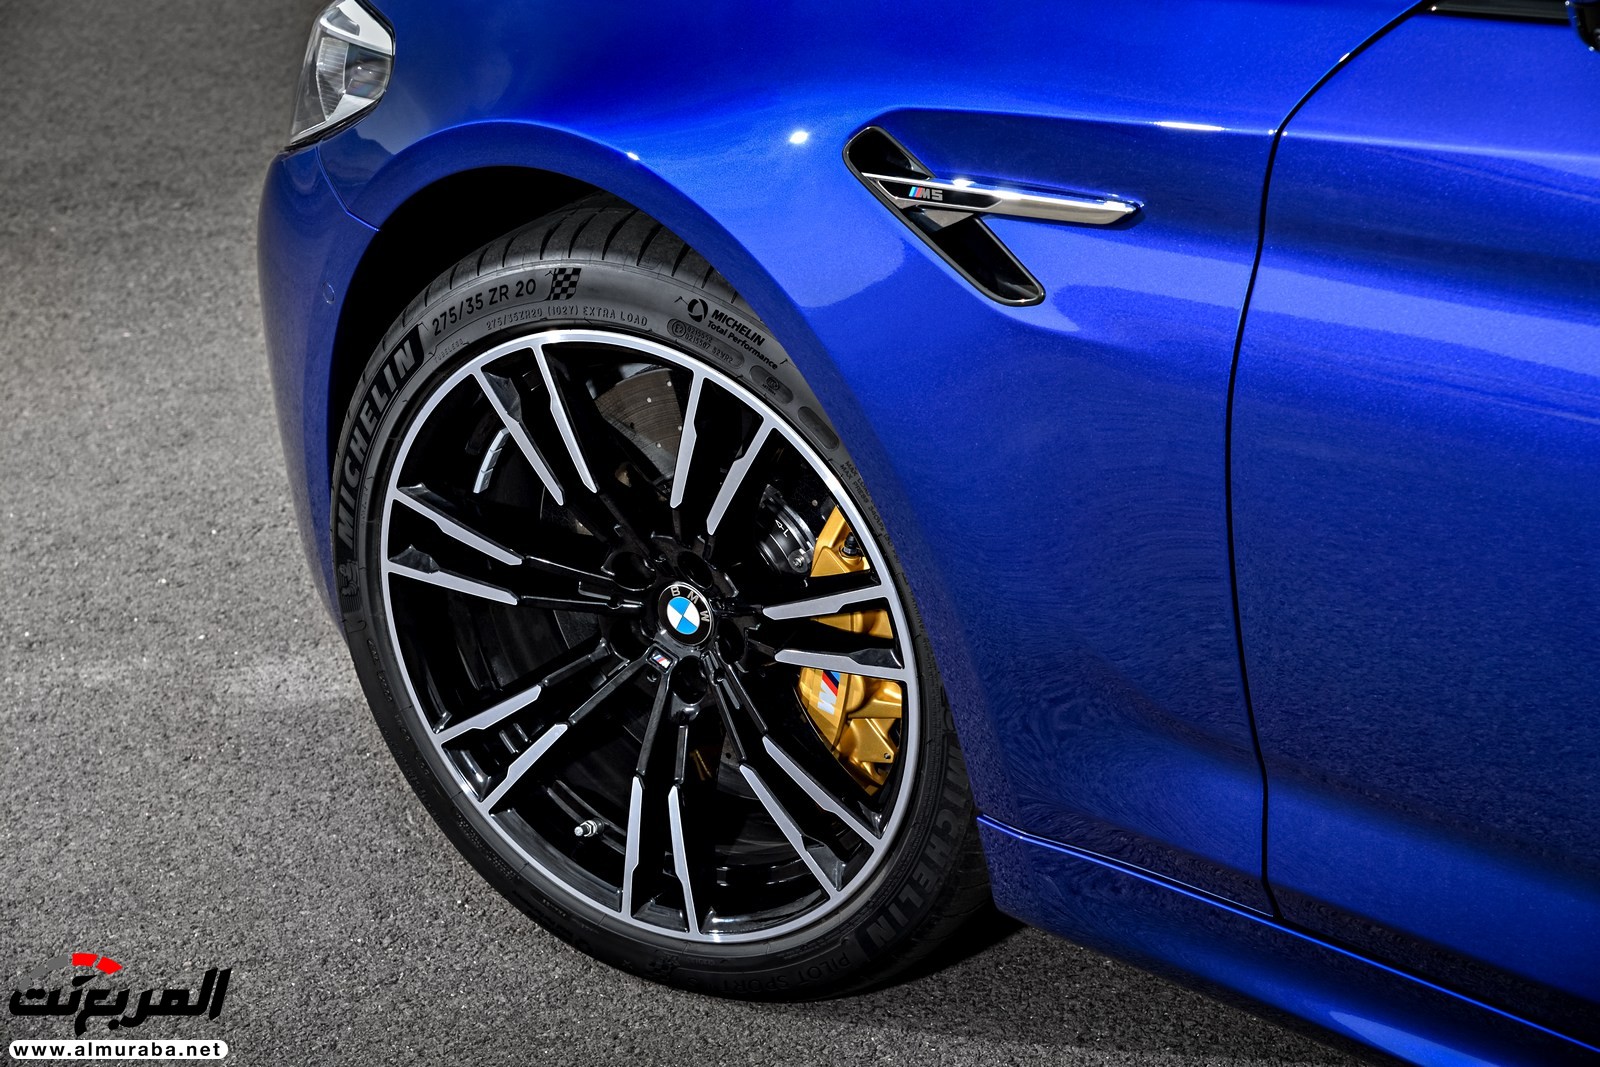 بي ام دبليو M5 2018 تكشف نفسها رسمياً بقوة ٦٠٠ حصان "صور ومواصفات" BMW 28